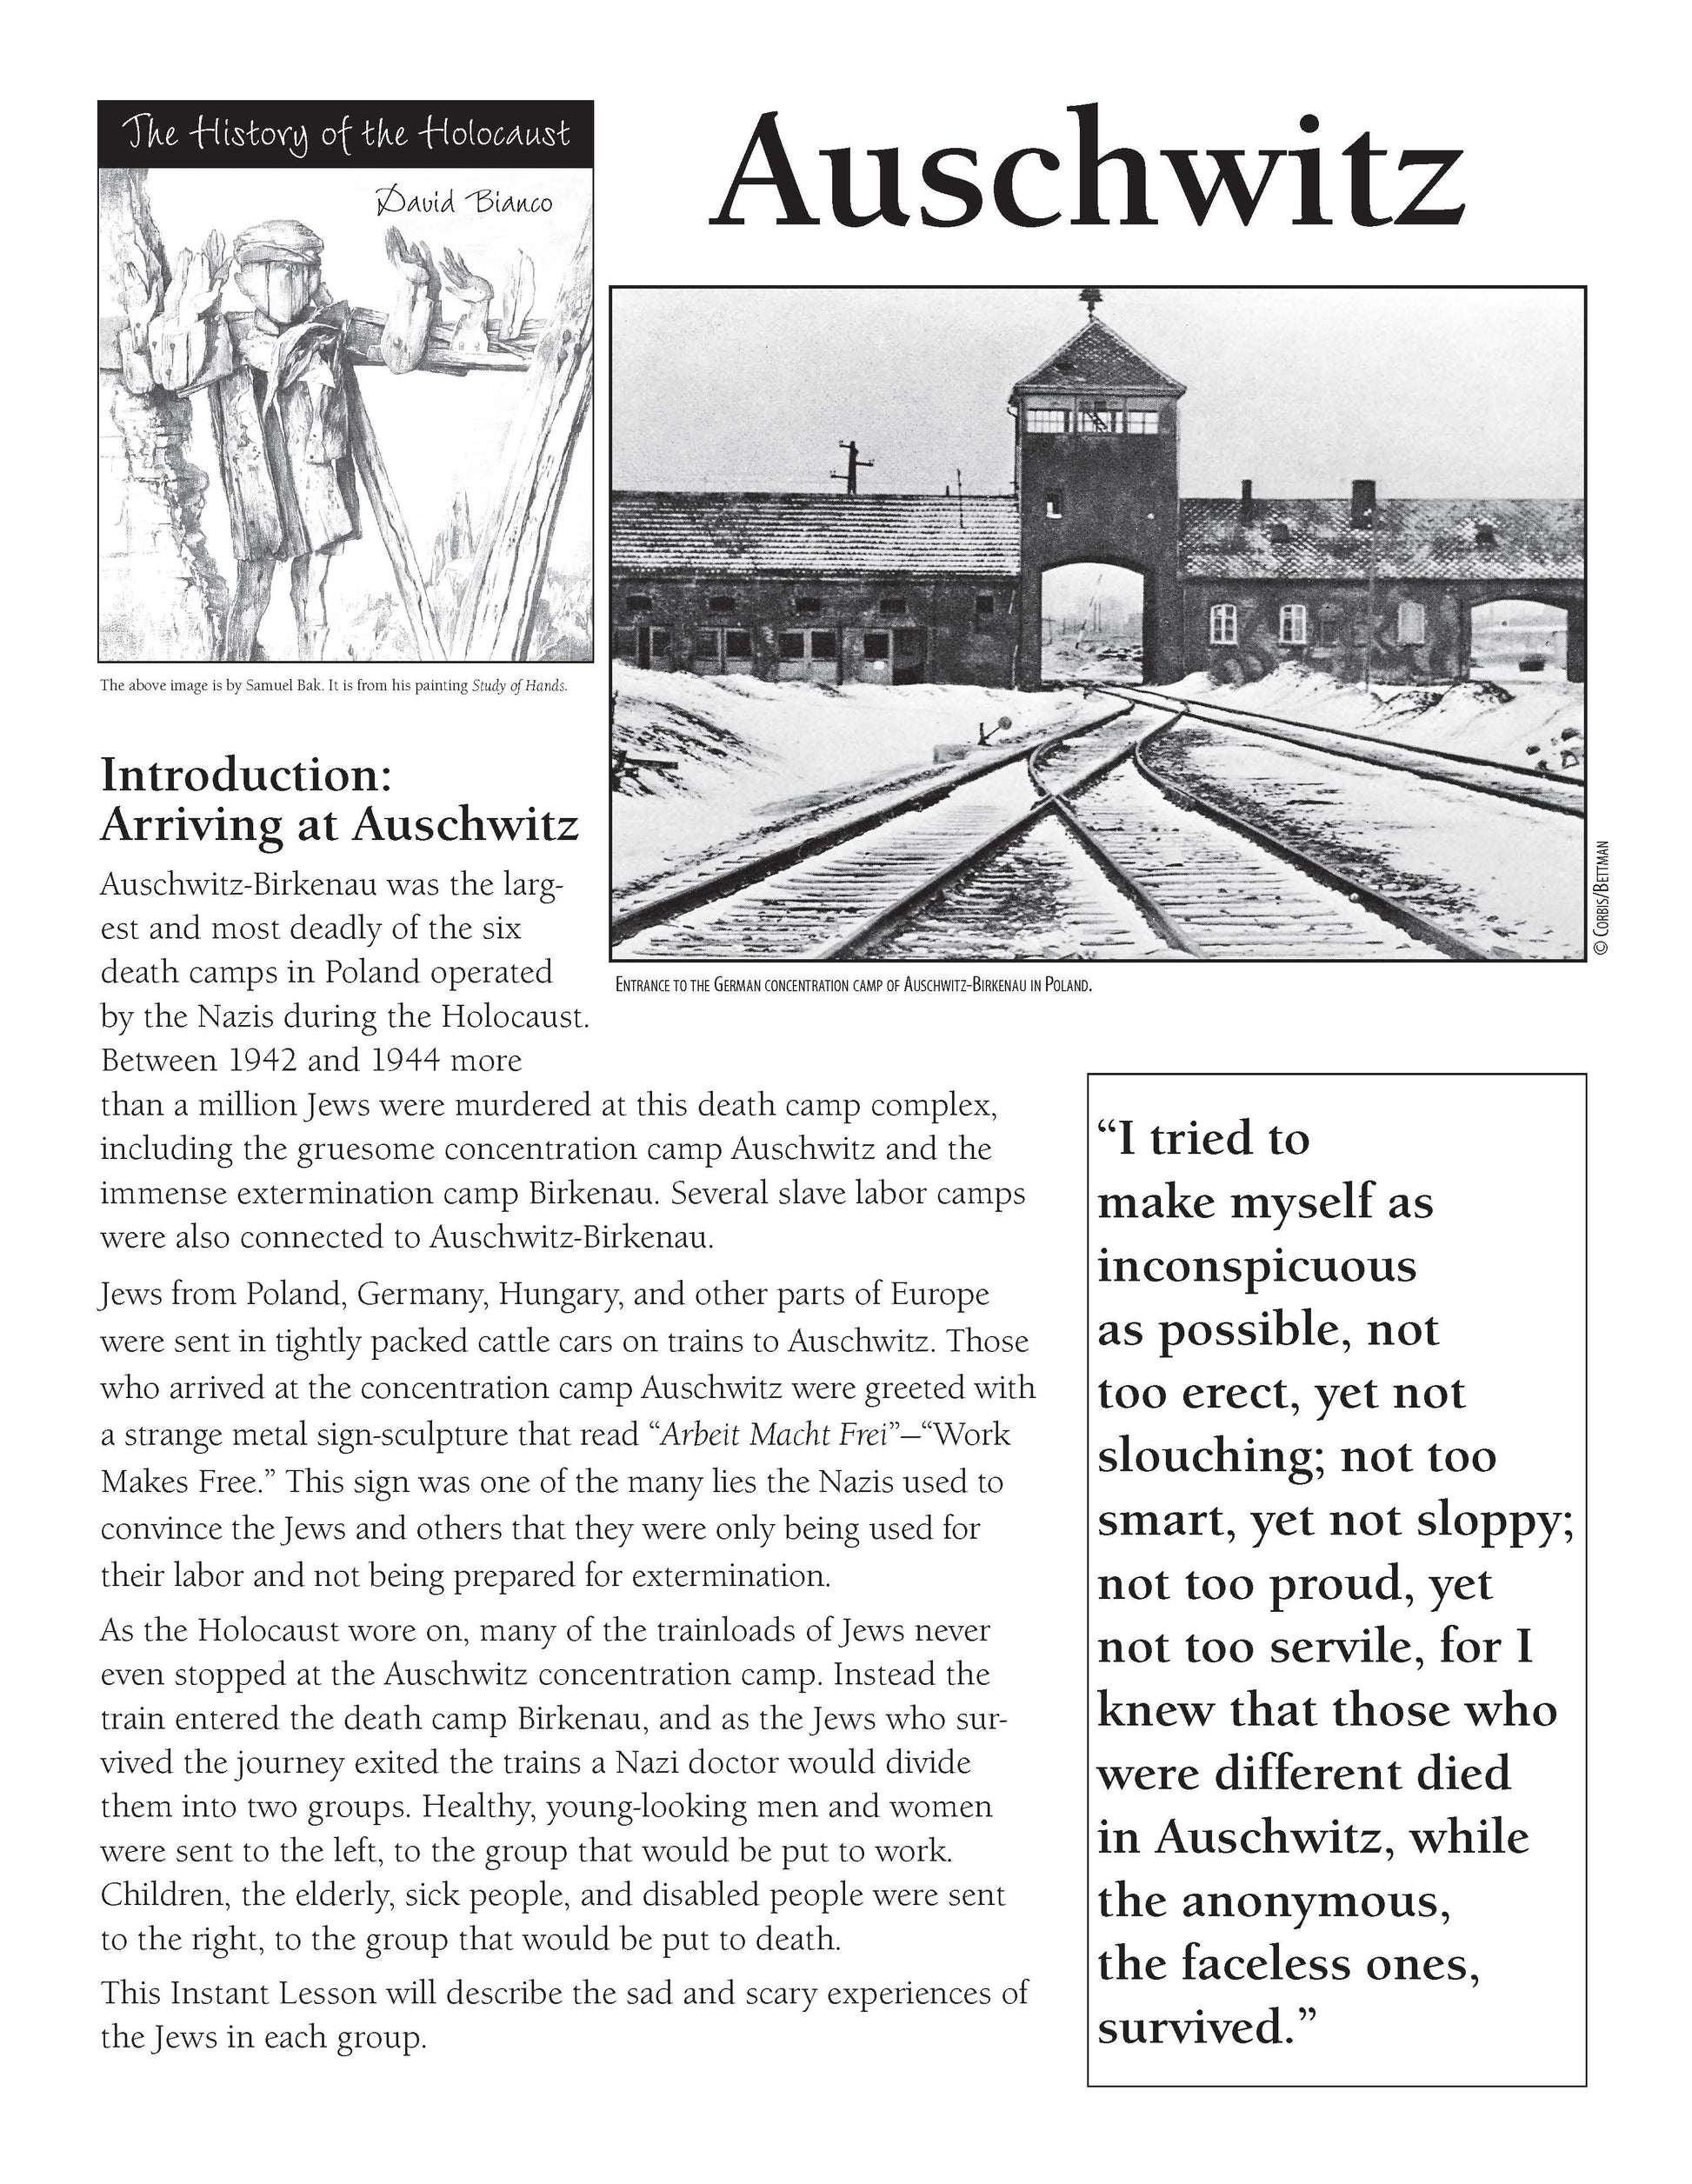 History of the Holocaust: Auschwitz